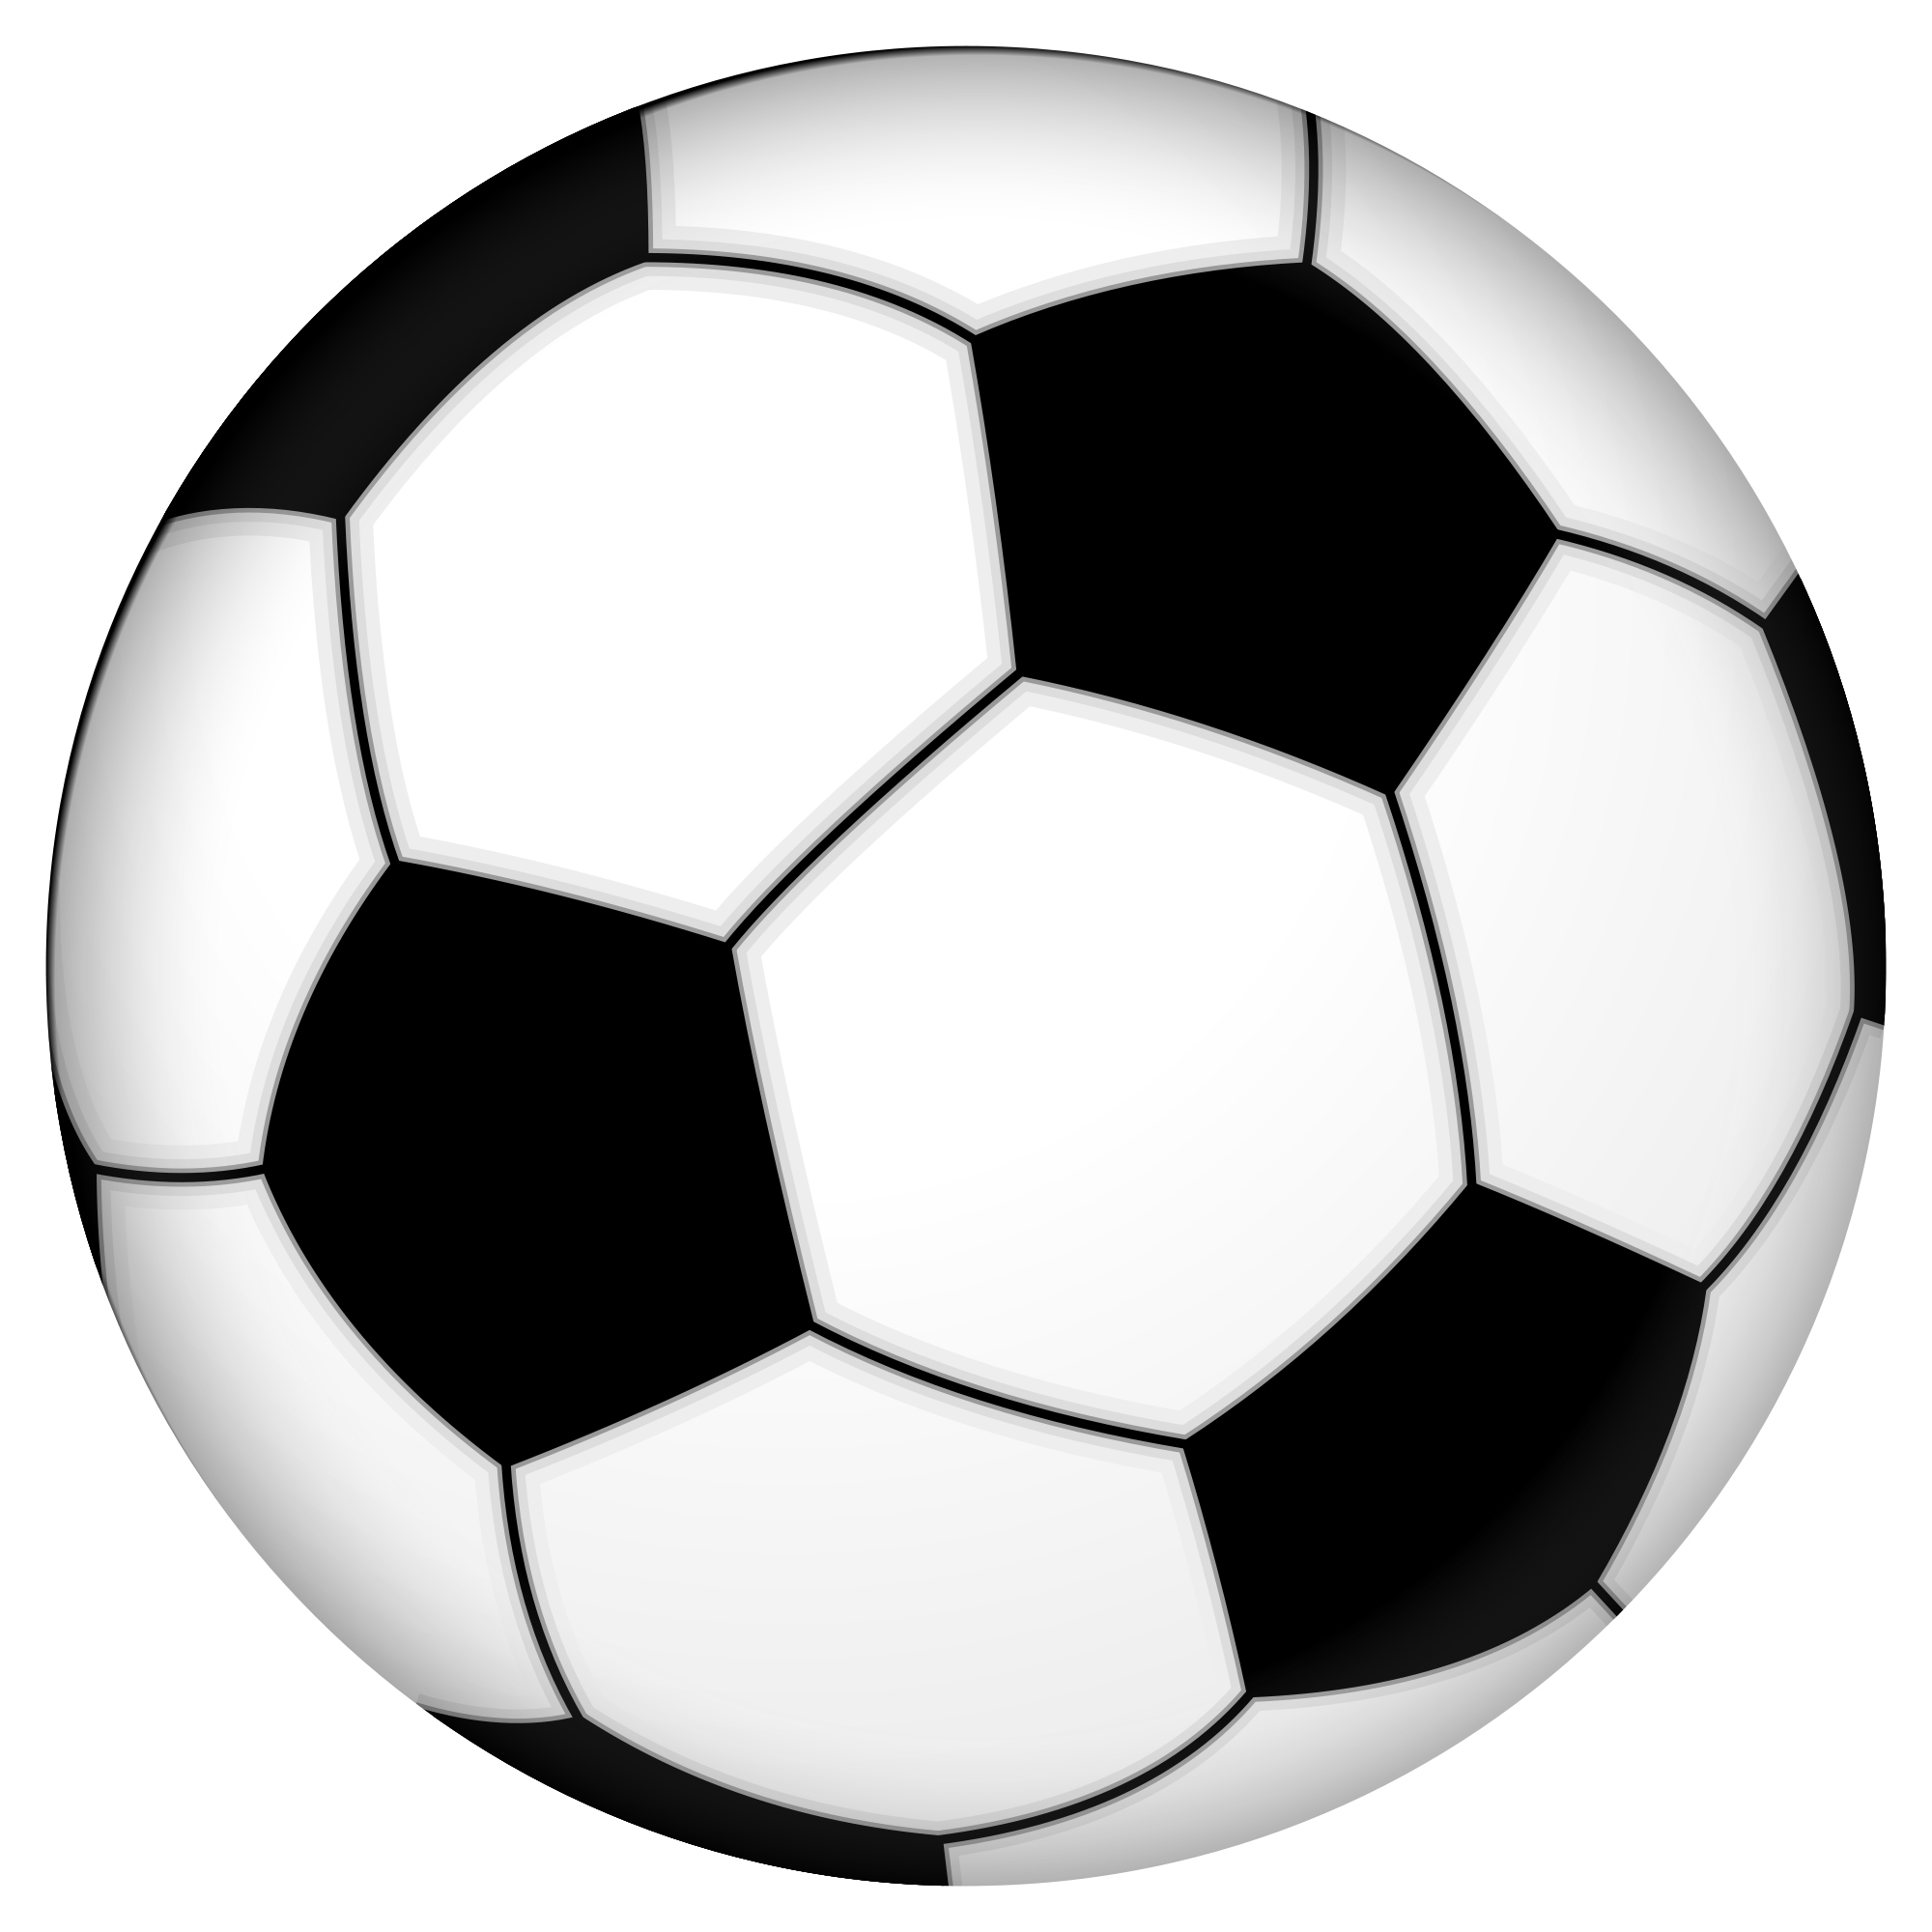 Kicking Soccer Ball Clip Art  - Soccer Ball Images Clip Art